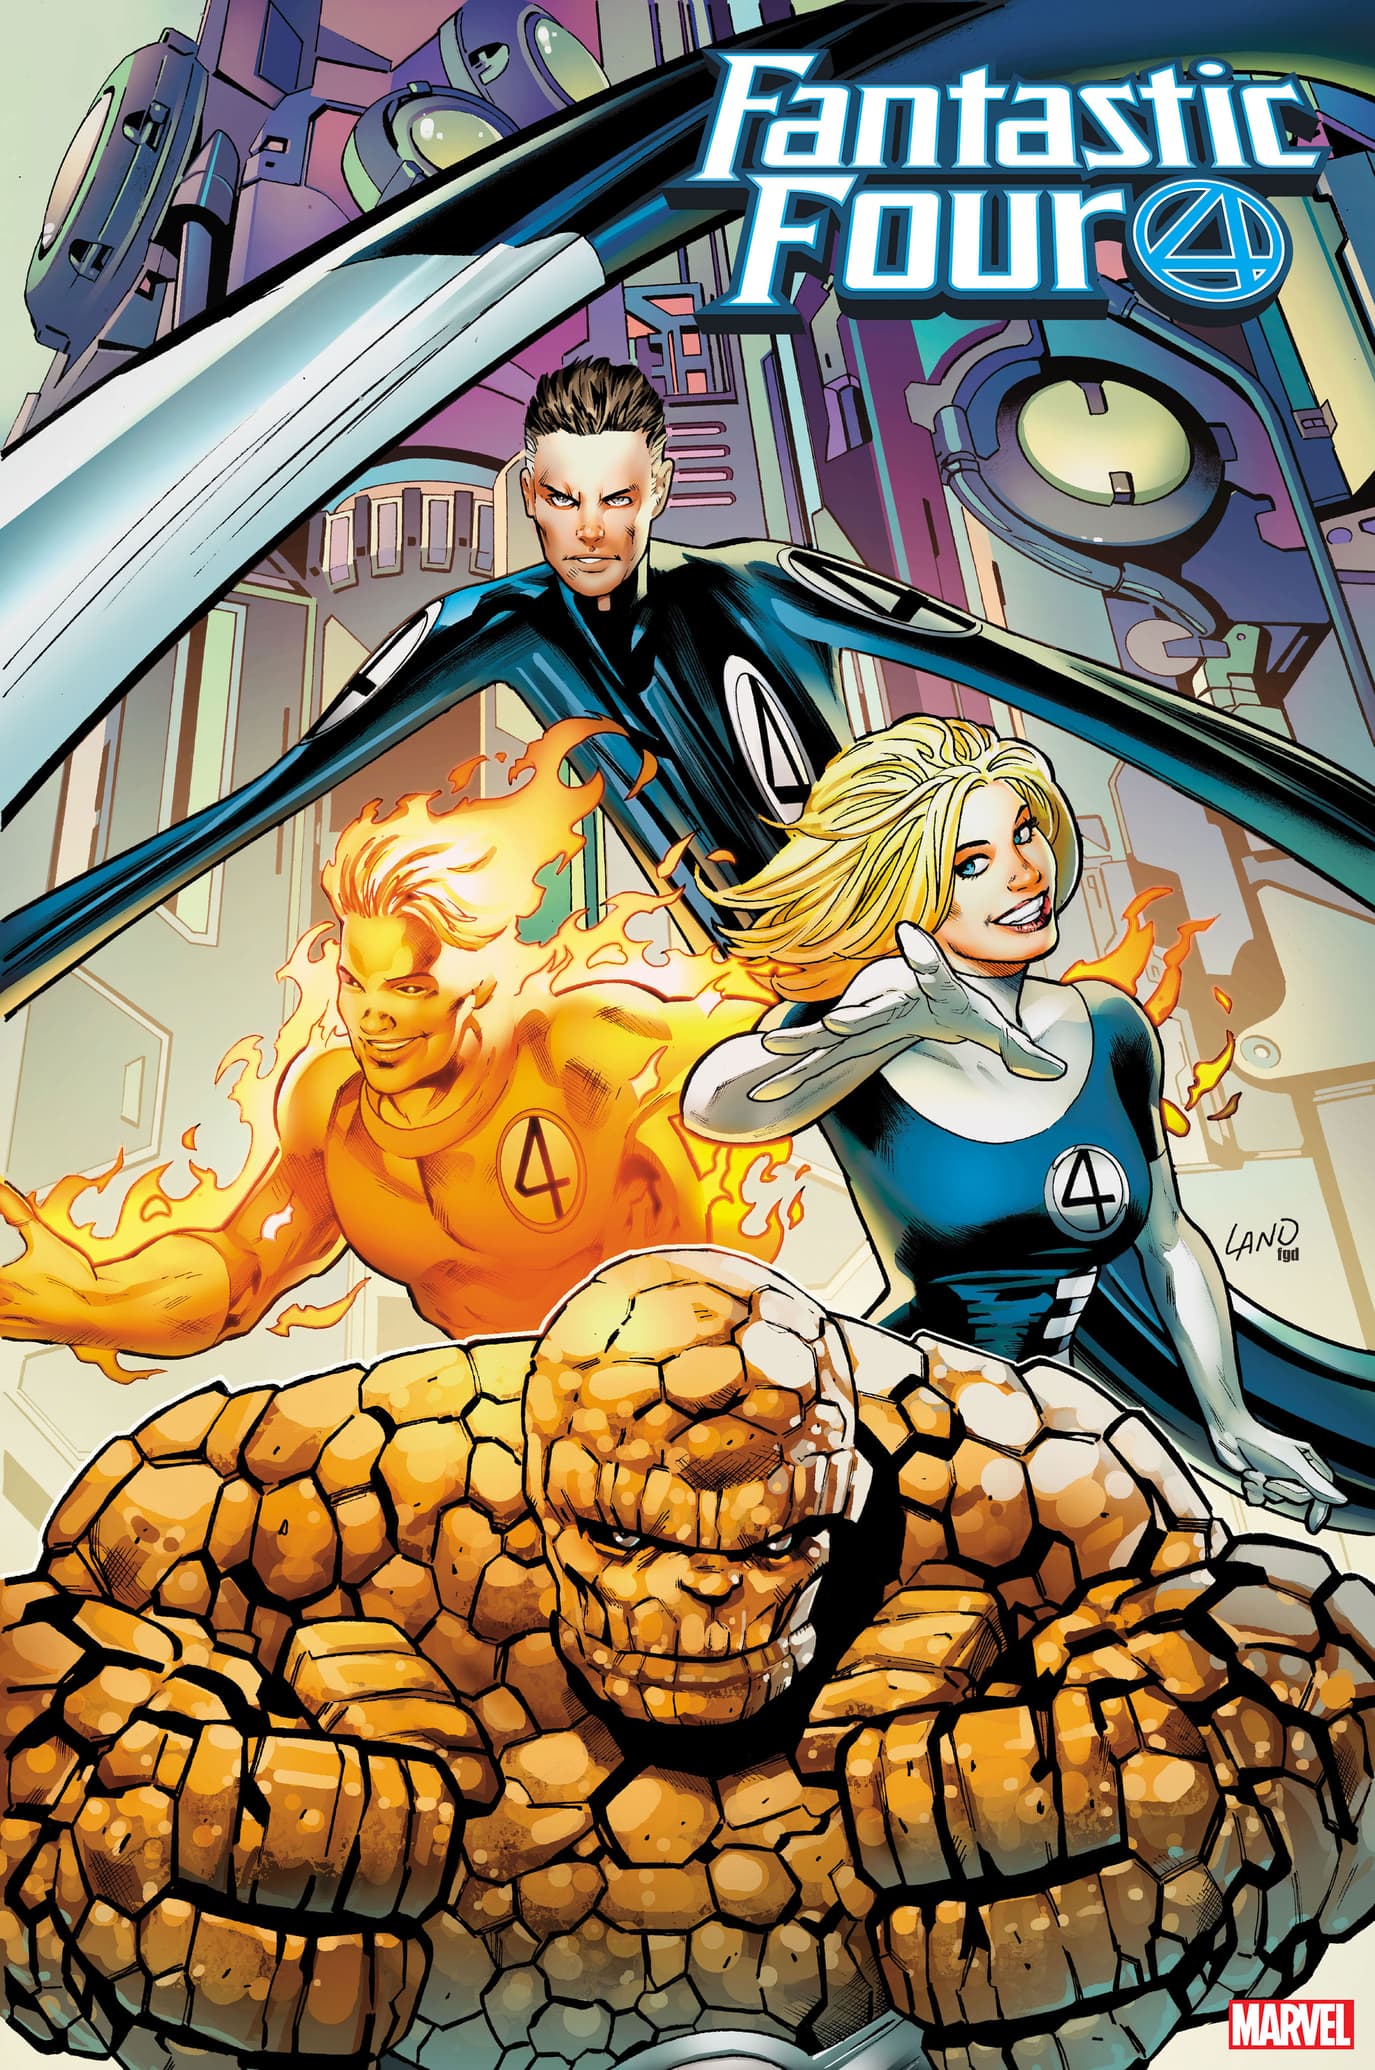 Fantastic Four 2099 variant cover